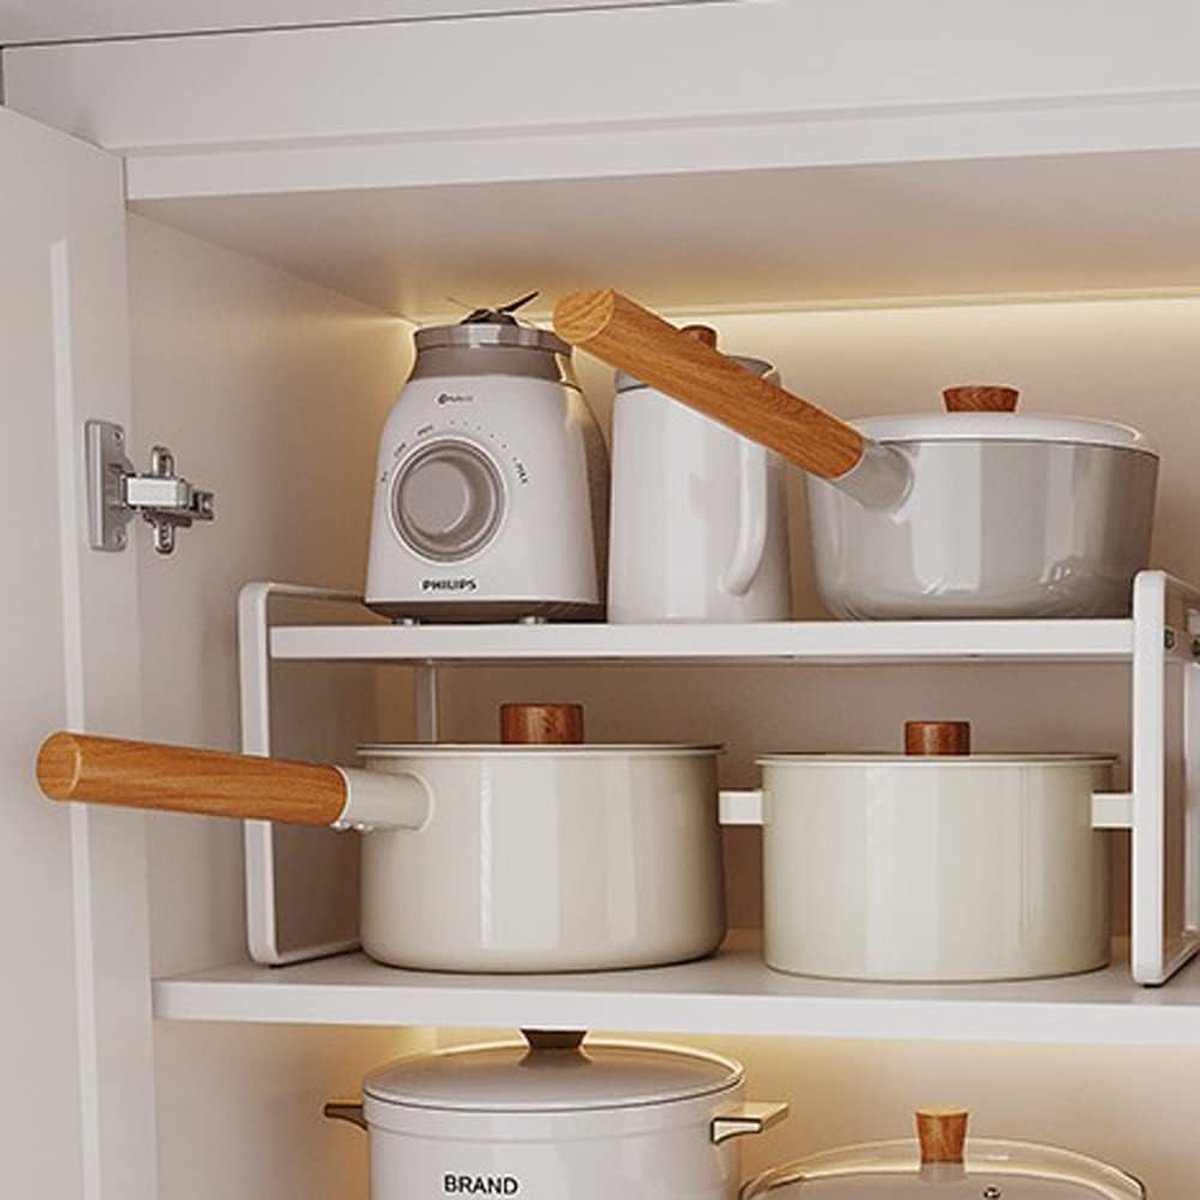 Plankinzet, keukenkast organizer met antislipmat, keukenkastinzet, voor keuken/badkamer/tafelblad/dressoir (wit)